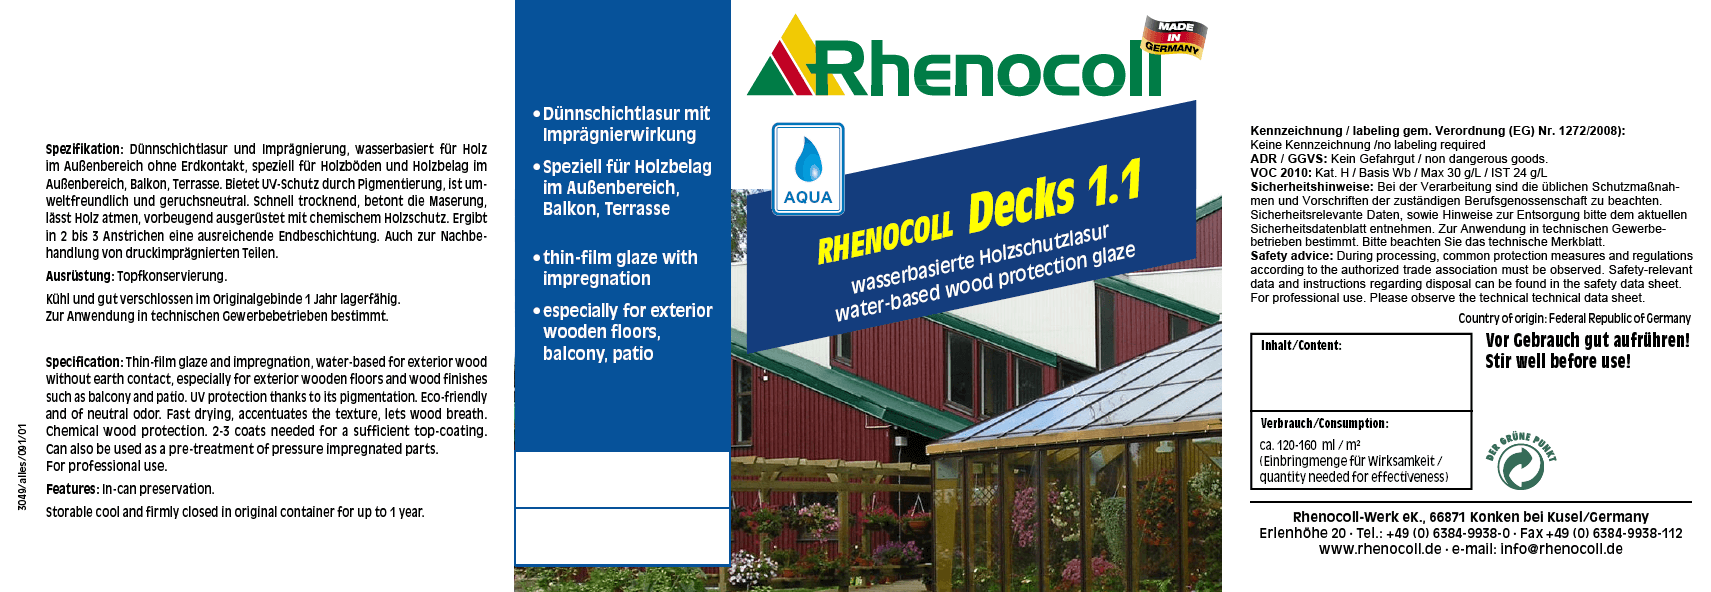 Rhenocoll Decks 1.1